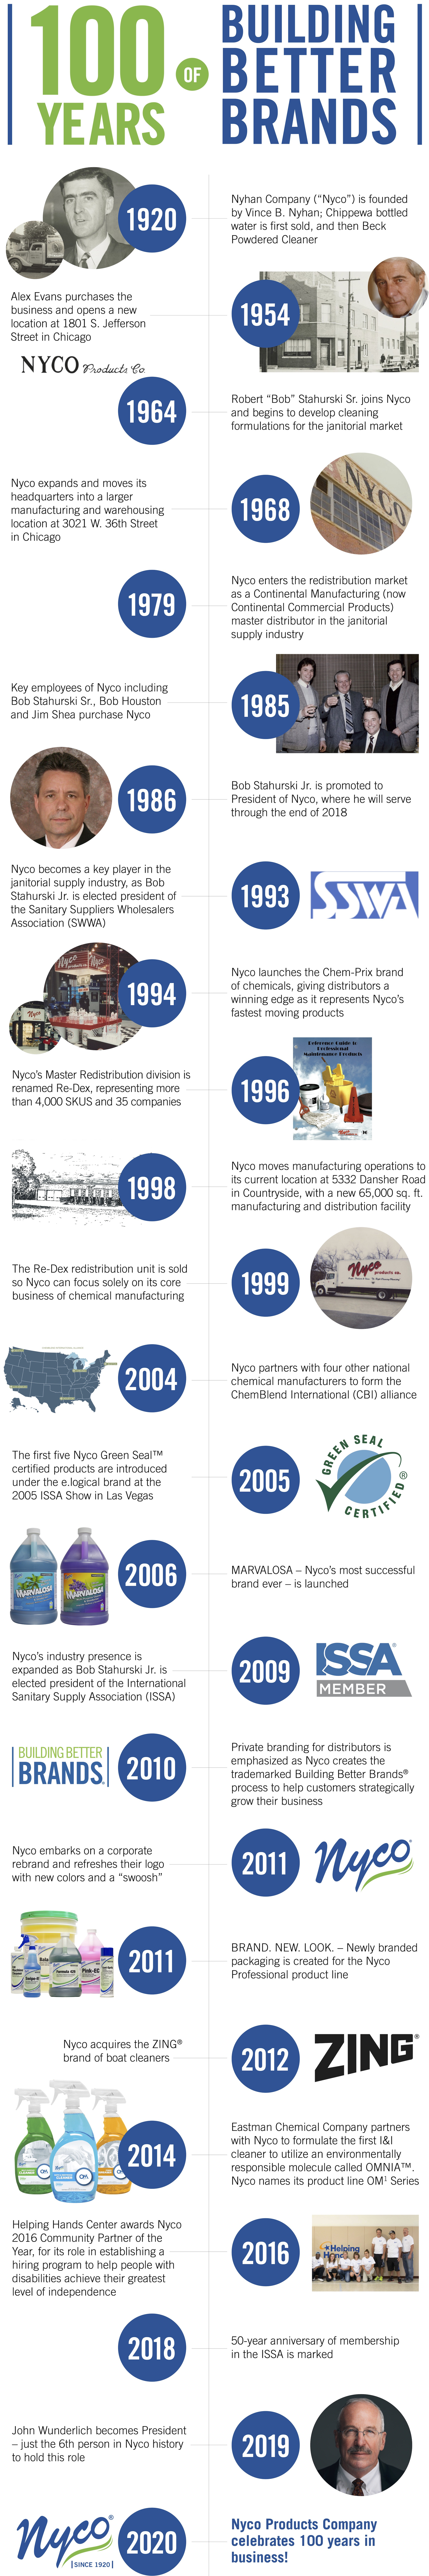 Nyco 100 Year History - Nyco Products Company